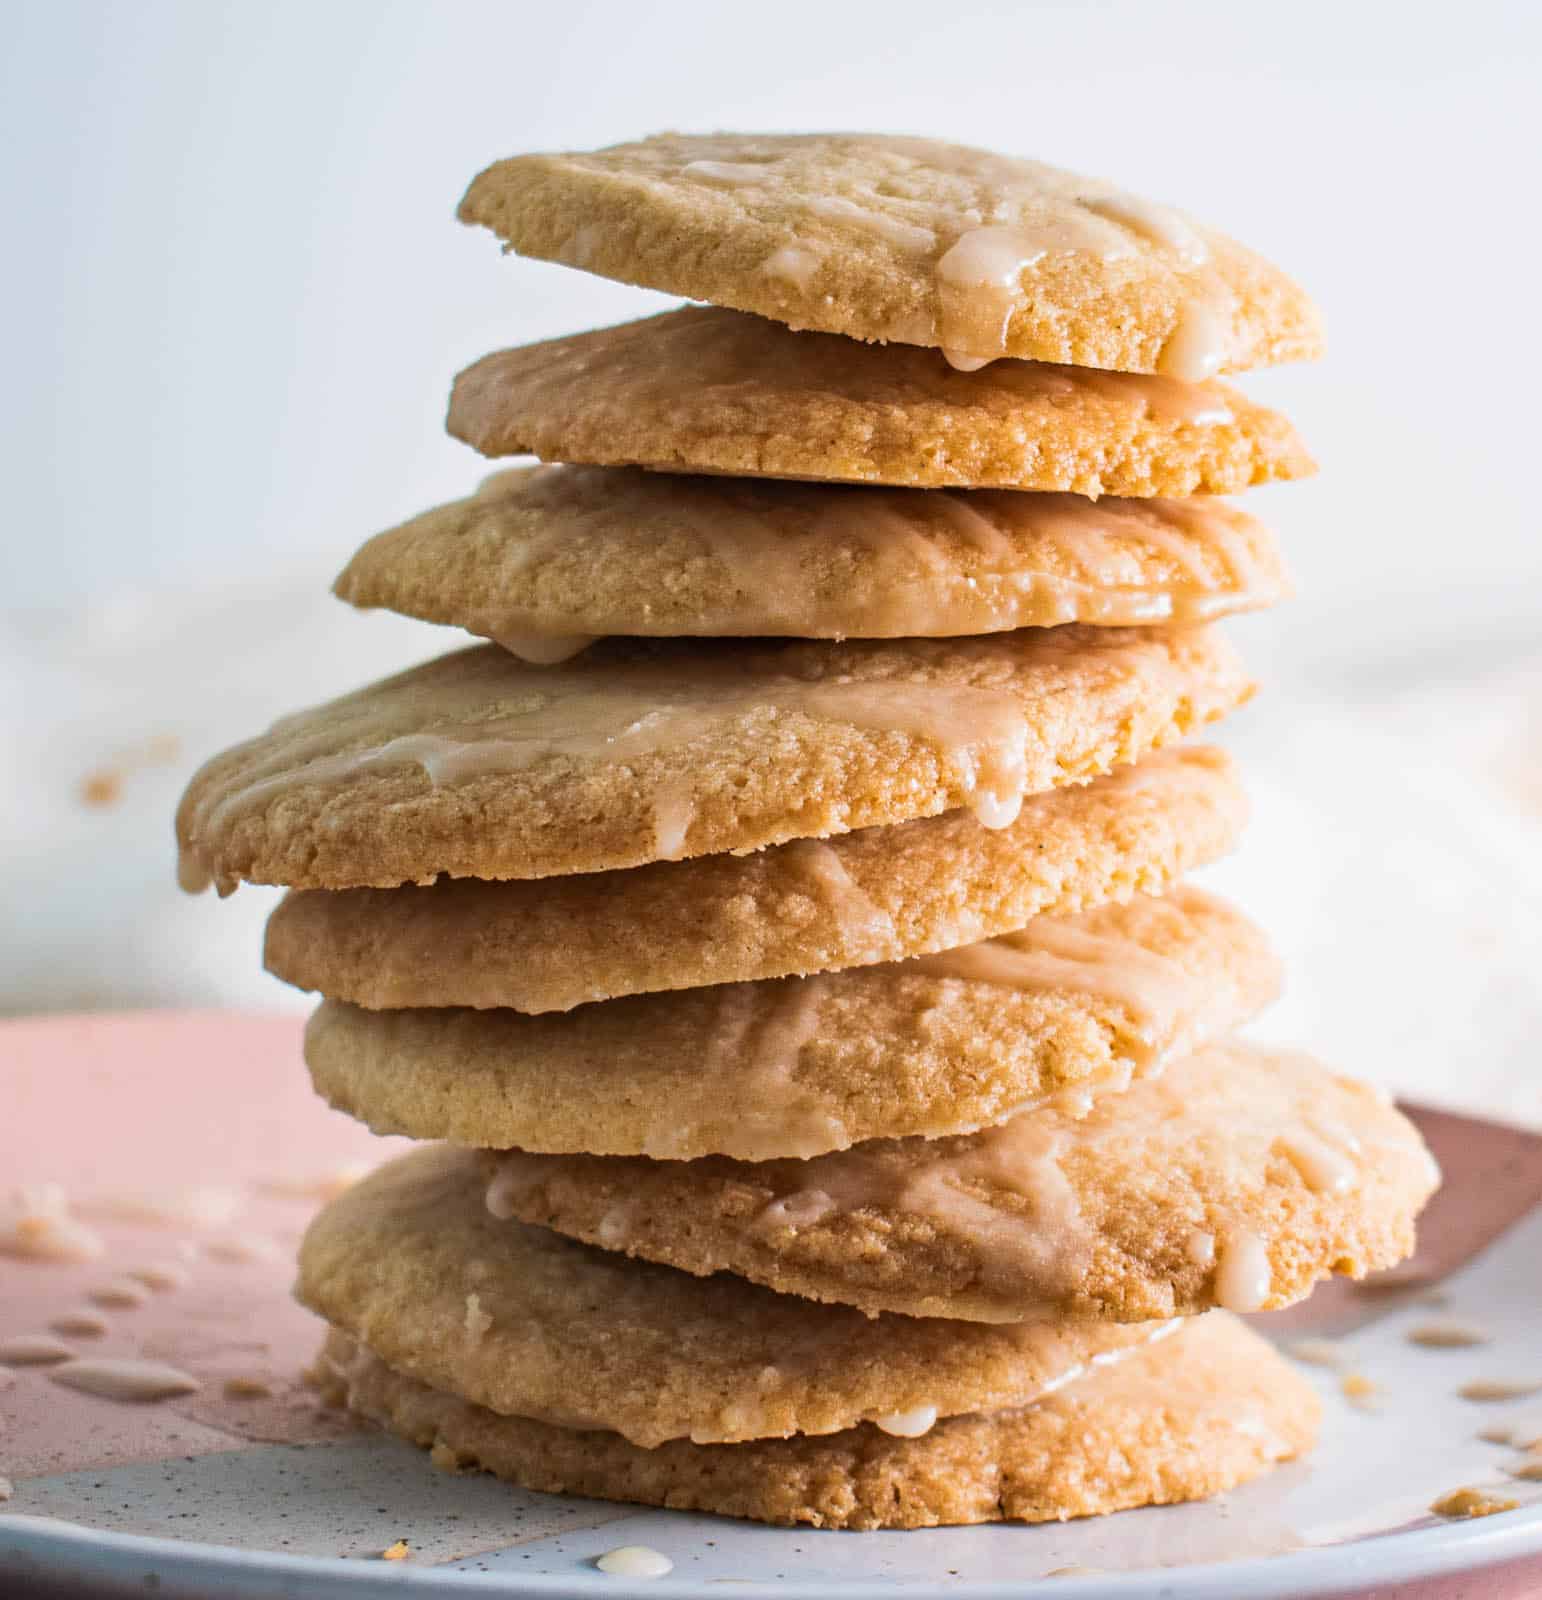 Gluten-free vanilla bourbon wafer cookies recipe